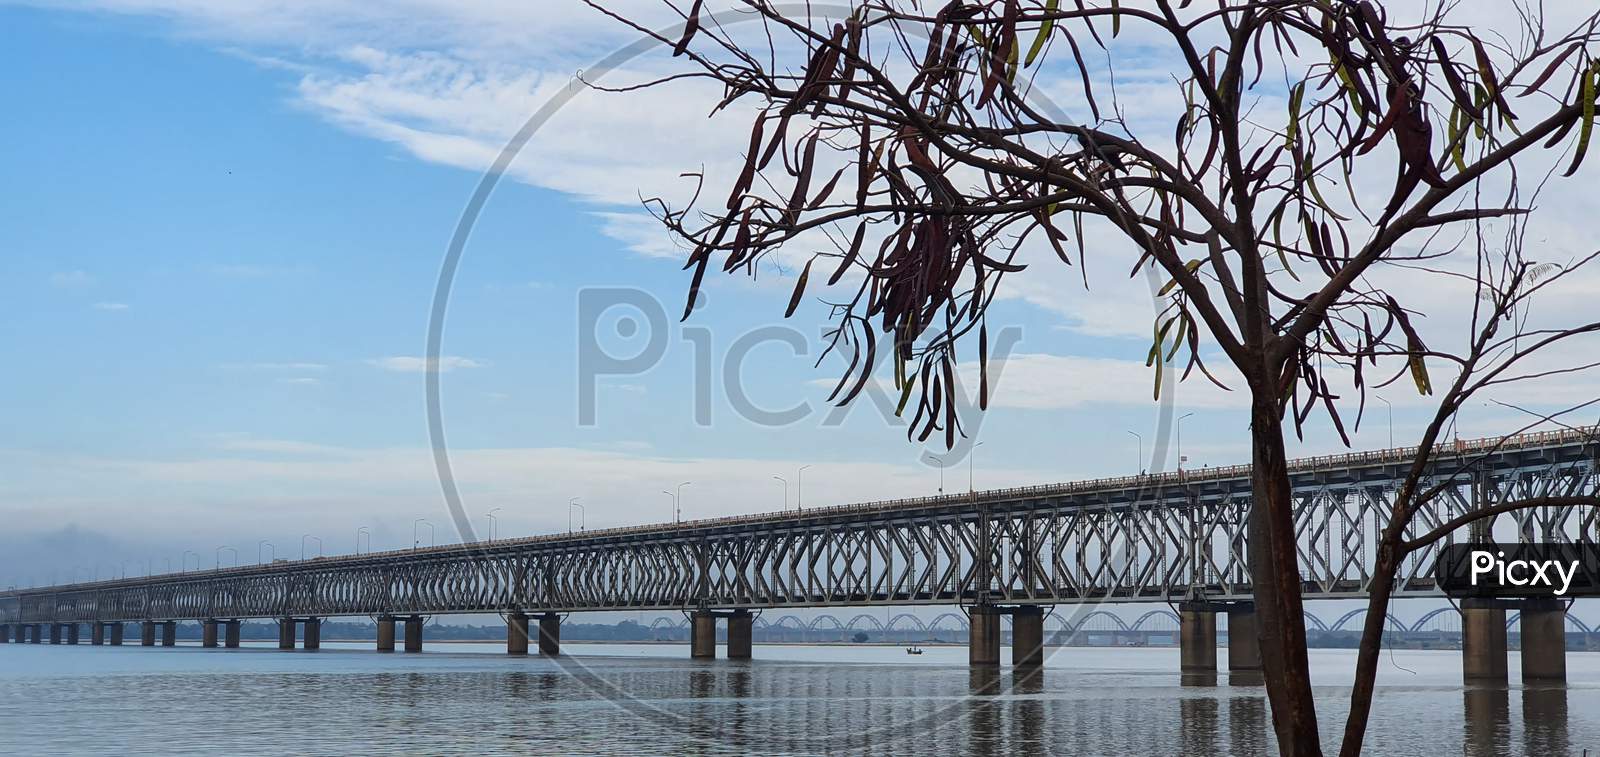 Beautiful image of Asia's longest rail cum raod bridge across the calm Godavari  river in Rajahmundry